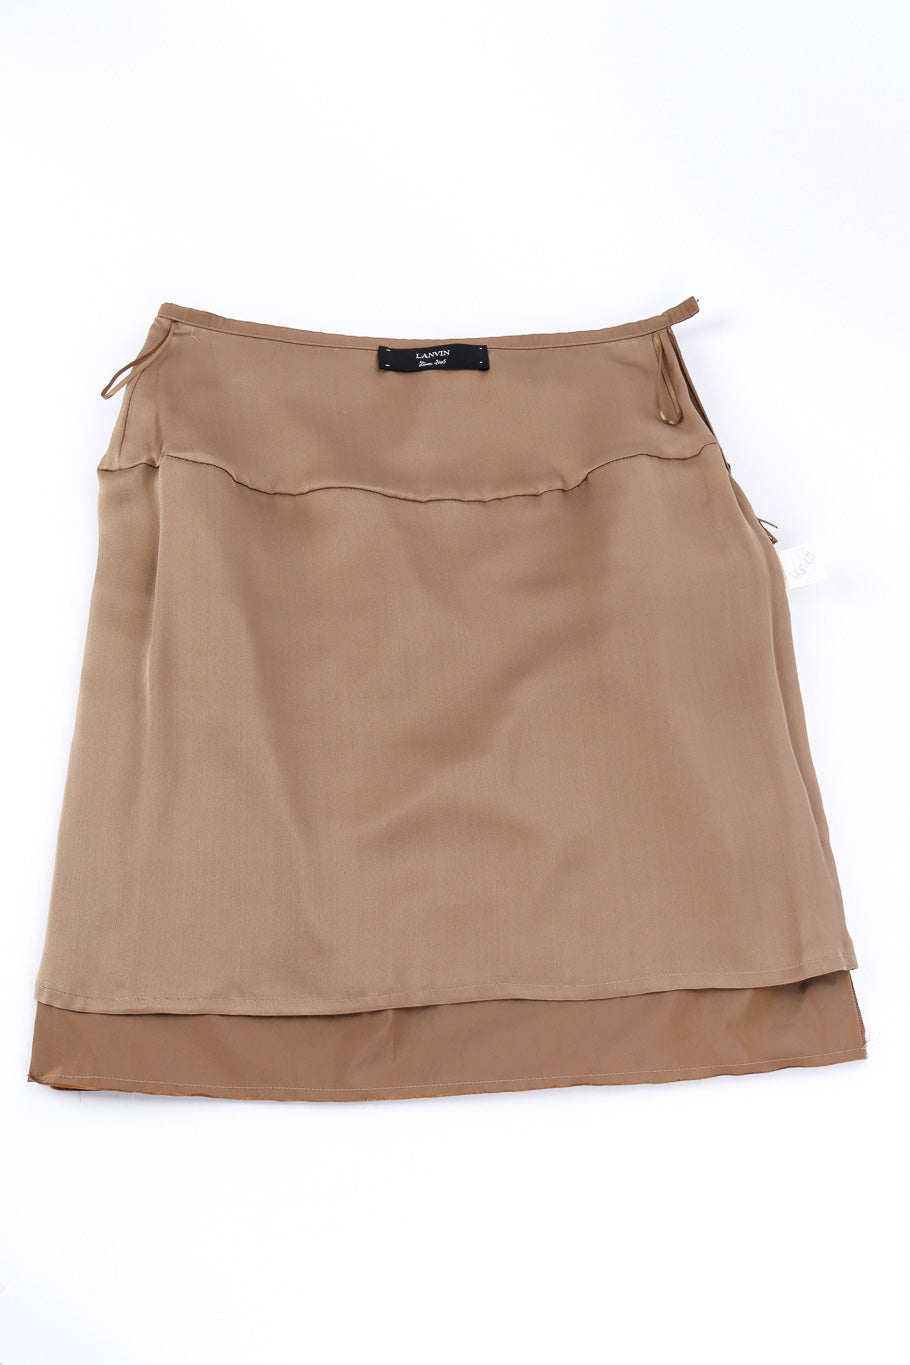 Vintage Lanvin Tiered Fringe Skirt view of lining @recessla